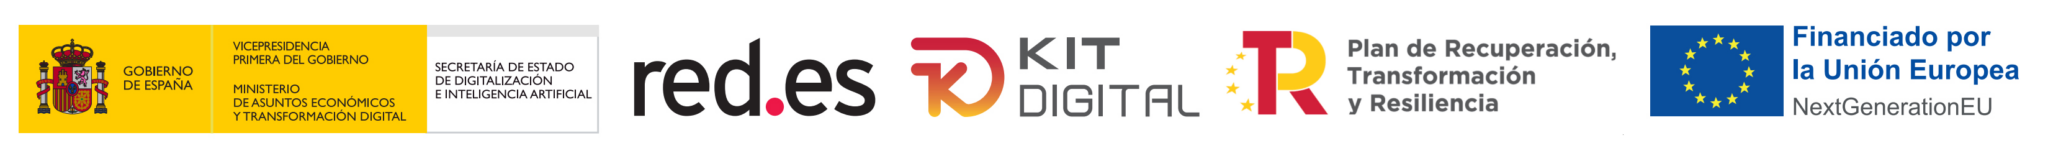 logos justificacion kit digital